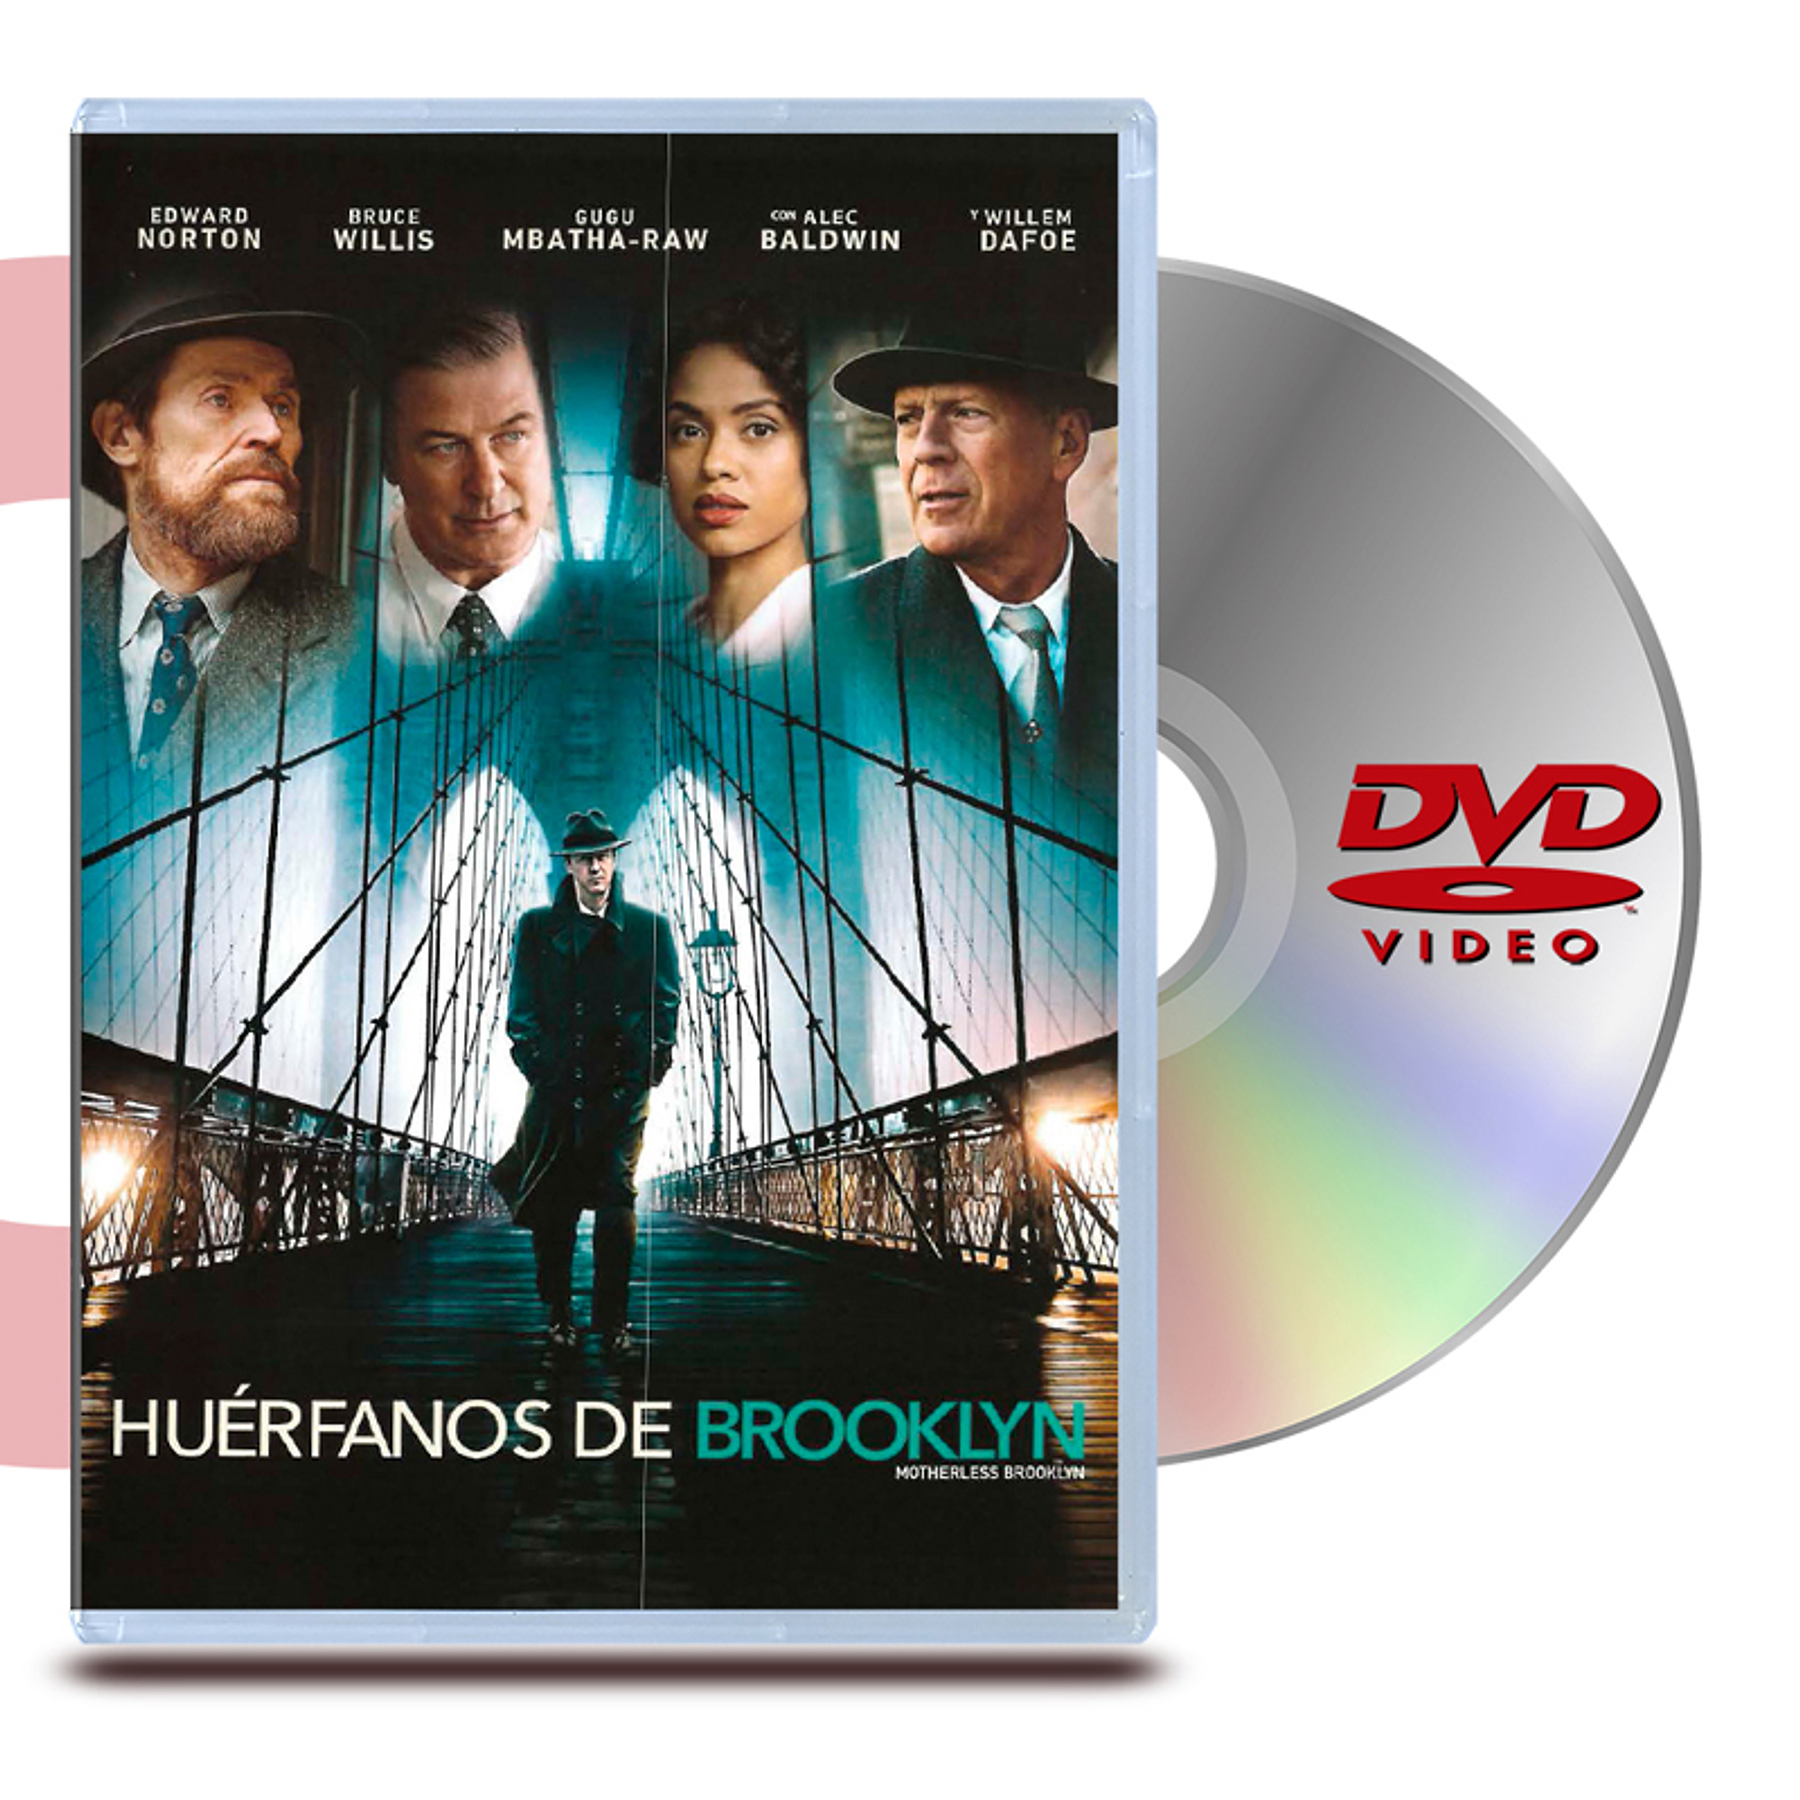 DVD HUERFANOS DE BROOKLYN